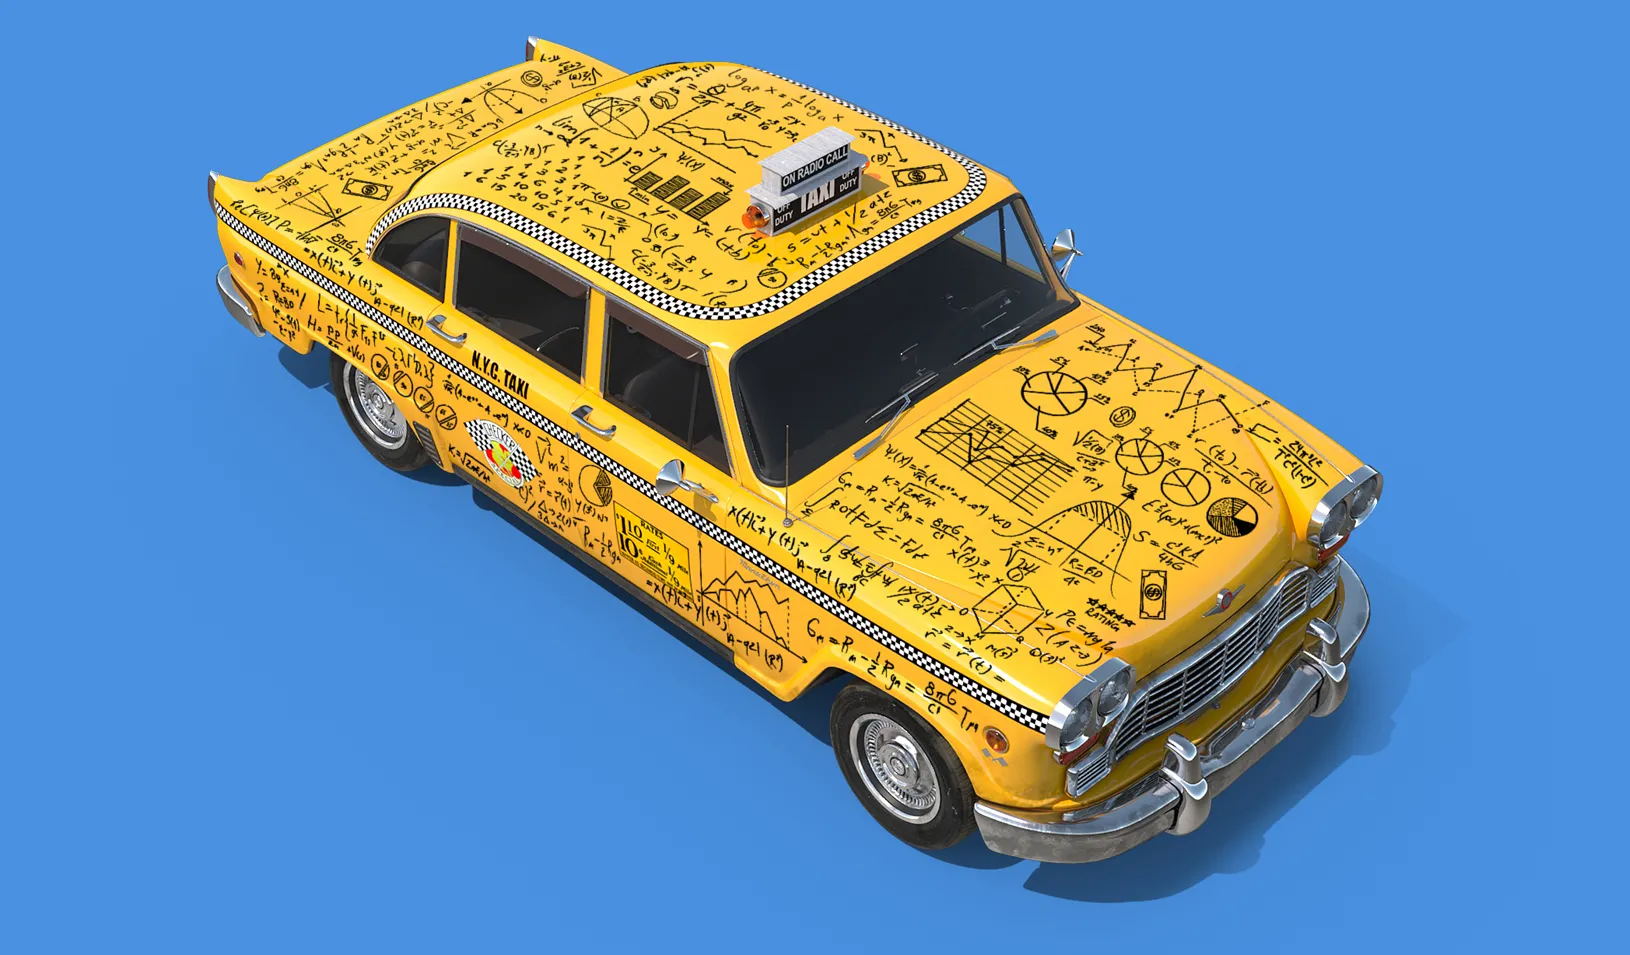 carmel peterson recommends Money Talks Taxi Cab